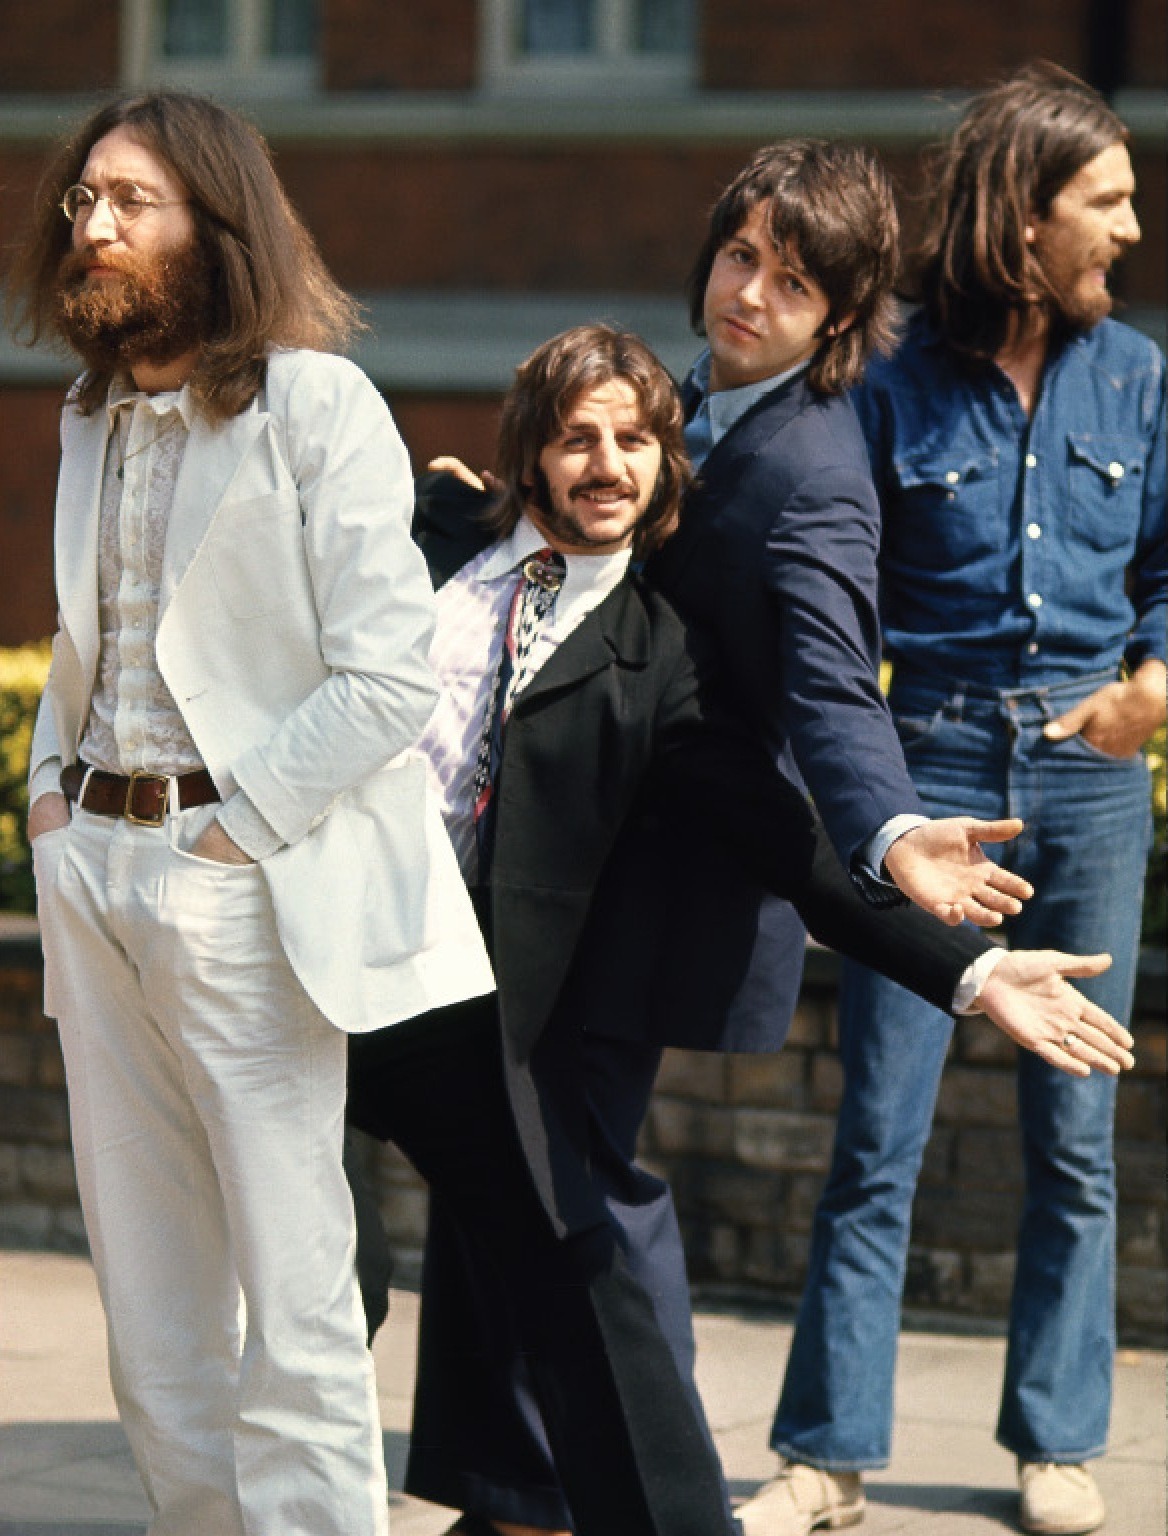 The Beatles Abbey Road Photoshoot - August 8 1969 - Flashbak